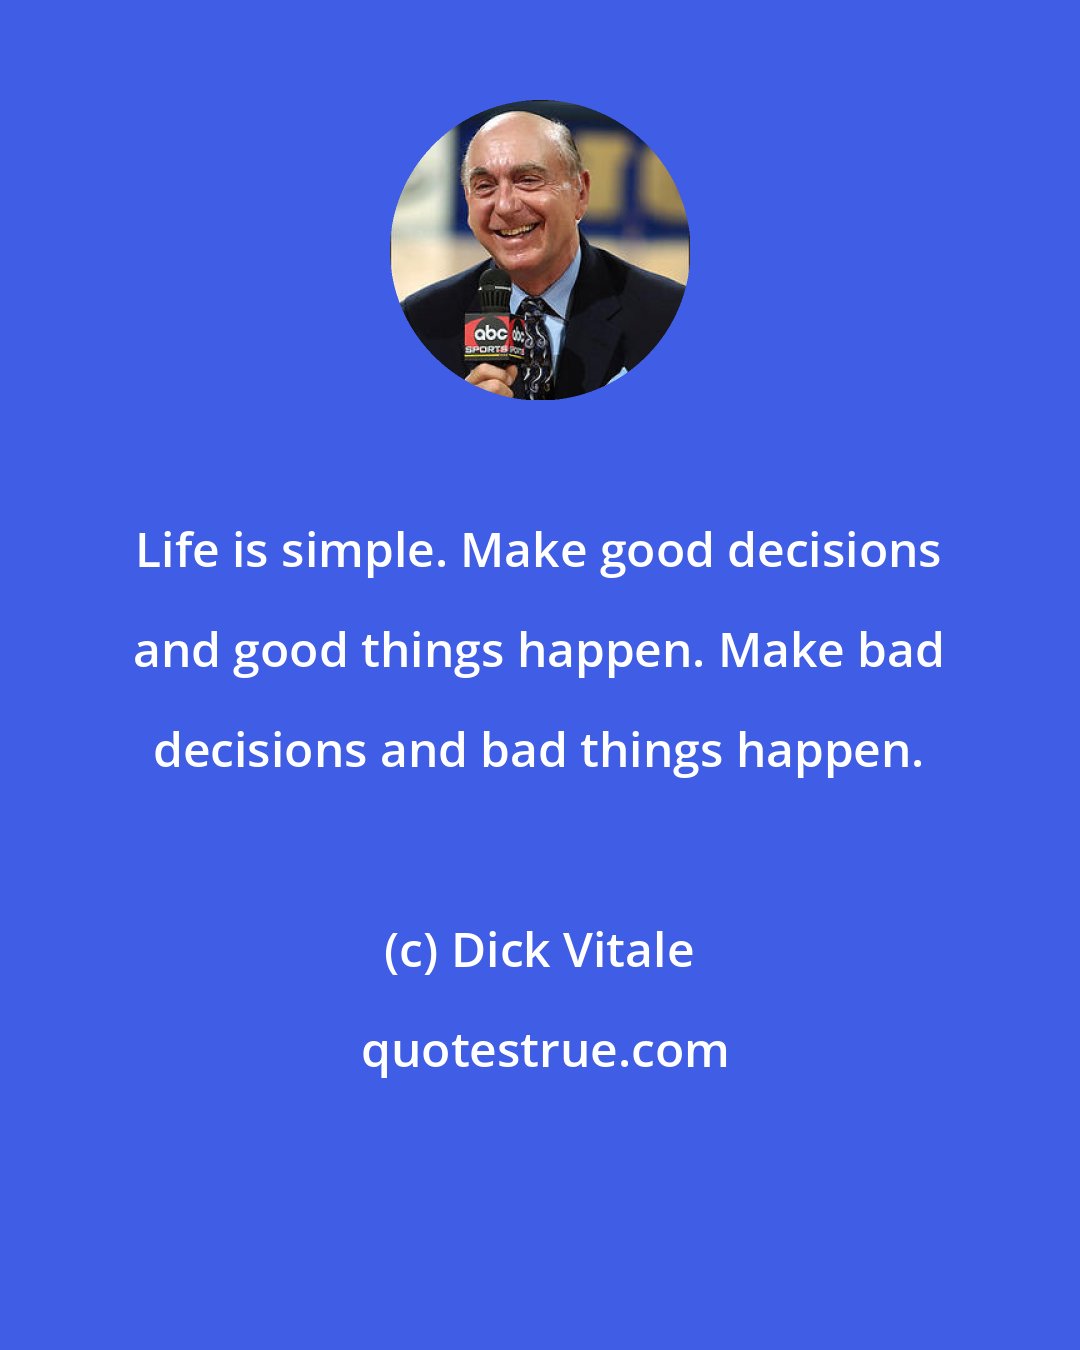 Dick Vitale: Life is simple. Make good decisions and good things happen. Make bad decisions and bad things happen.